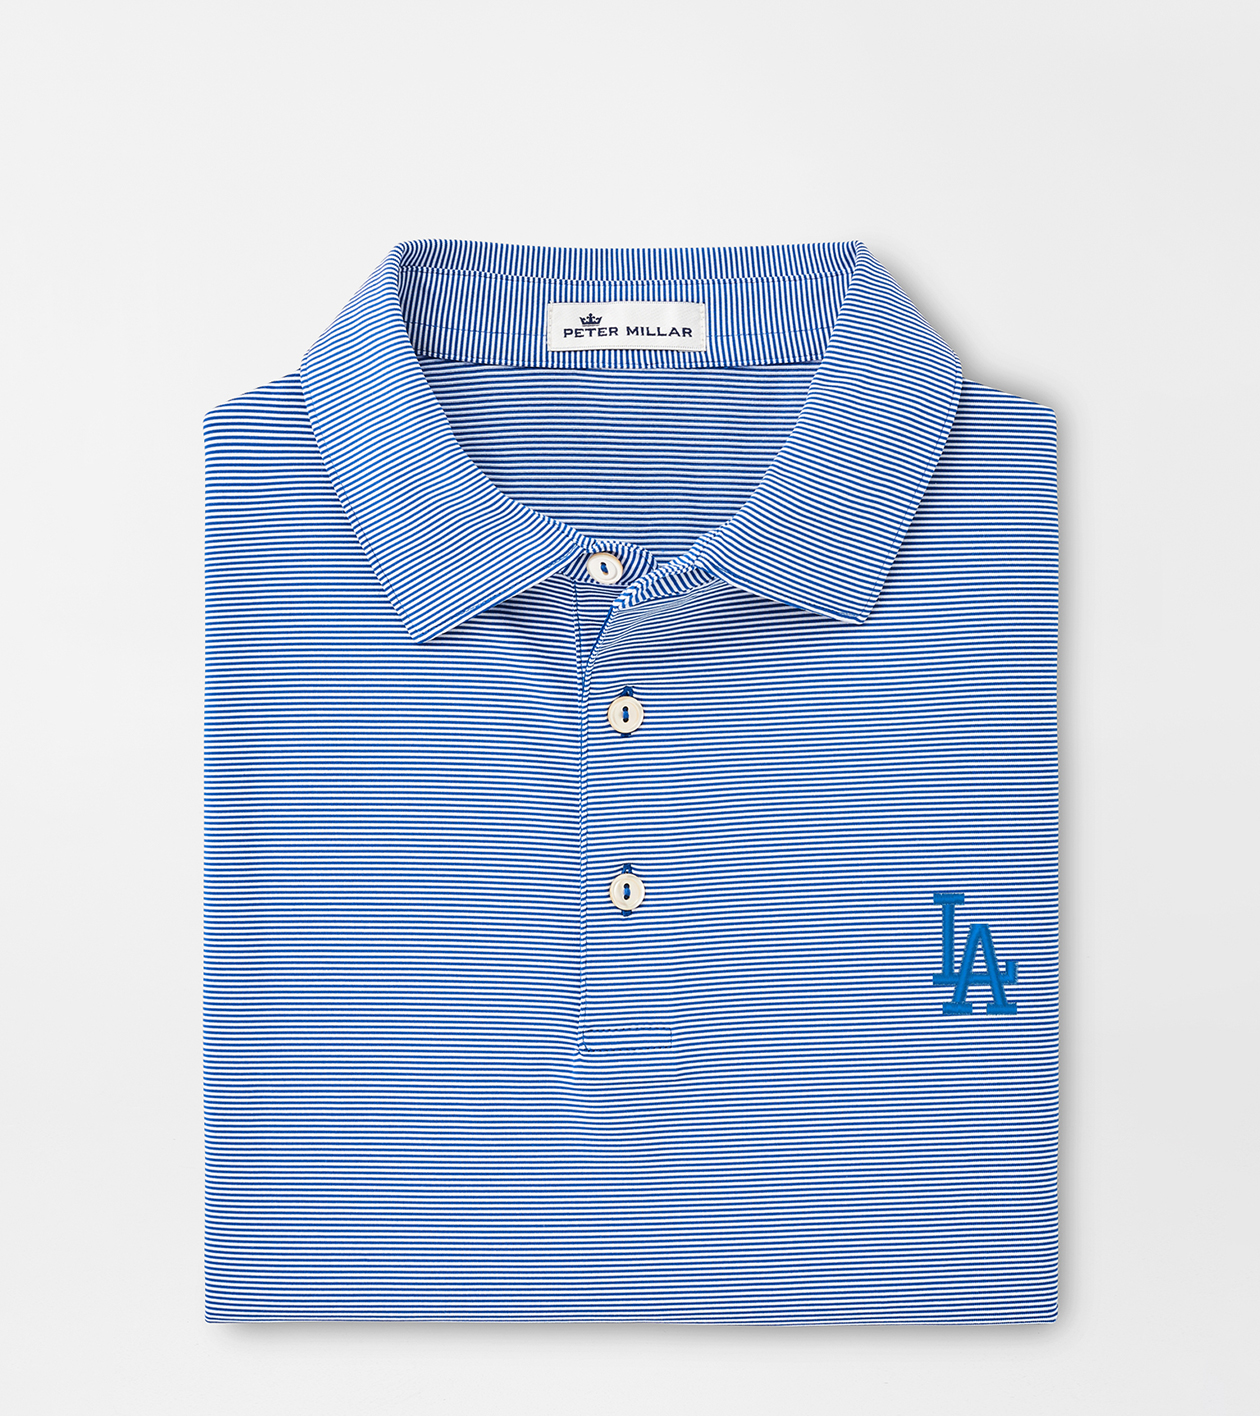 Los Angeles Dodgers Big & Tall Clothing, Dodgers Big & Tall Apparel, Gear &  Merchandise